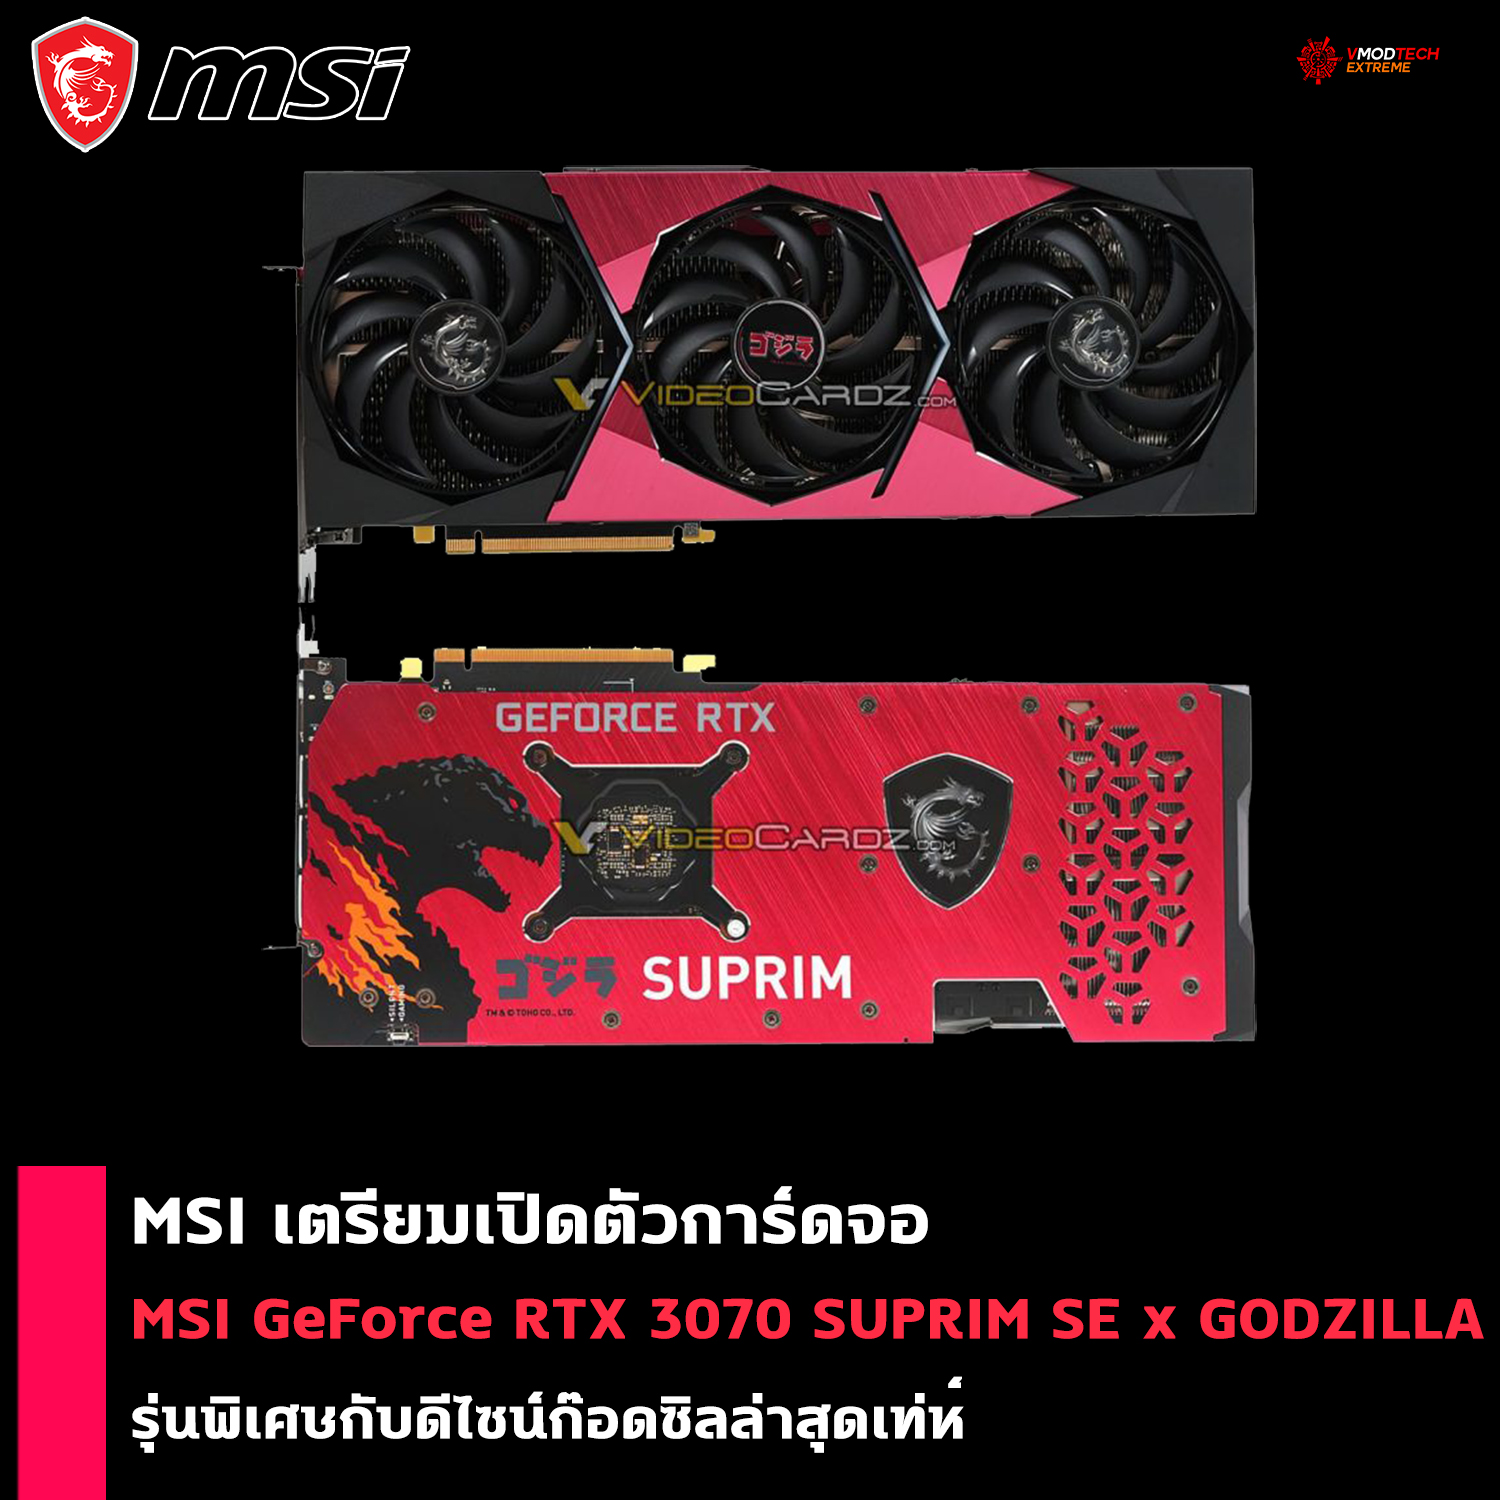 msi geforce rtx 3070 suprim se x godzilla MSI เตรียมเปิดตัวการ์ดจอ MSI GeForce RTX 3070 SUPRIM SE x GODZILLA รุ่นพิเศษกับดีไซน์ก๊อดซิลล่าสุดเท่ห์